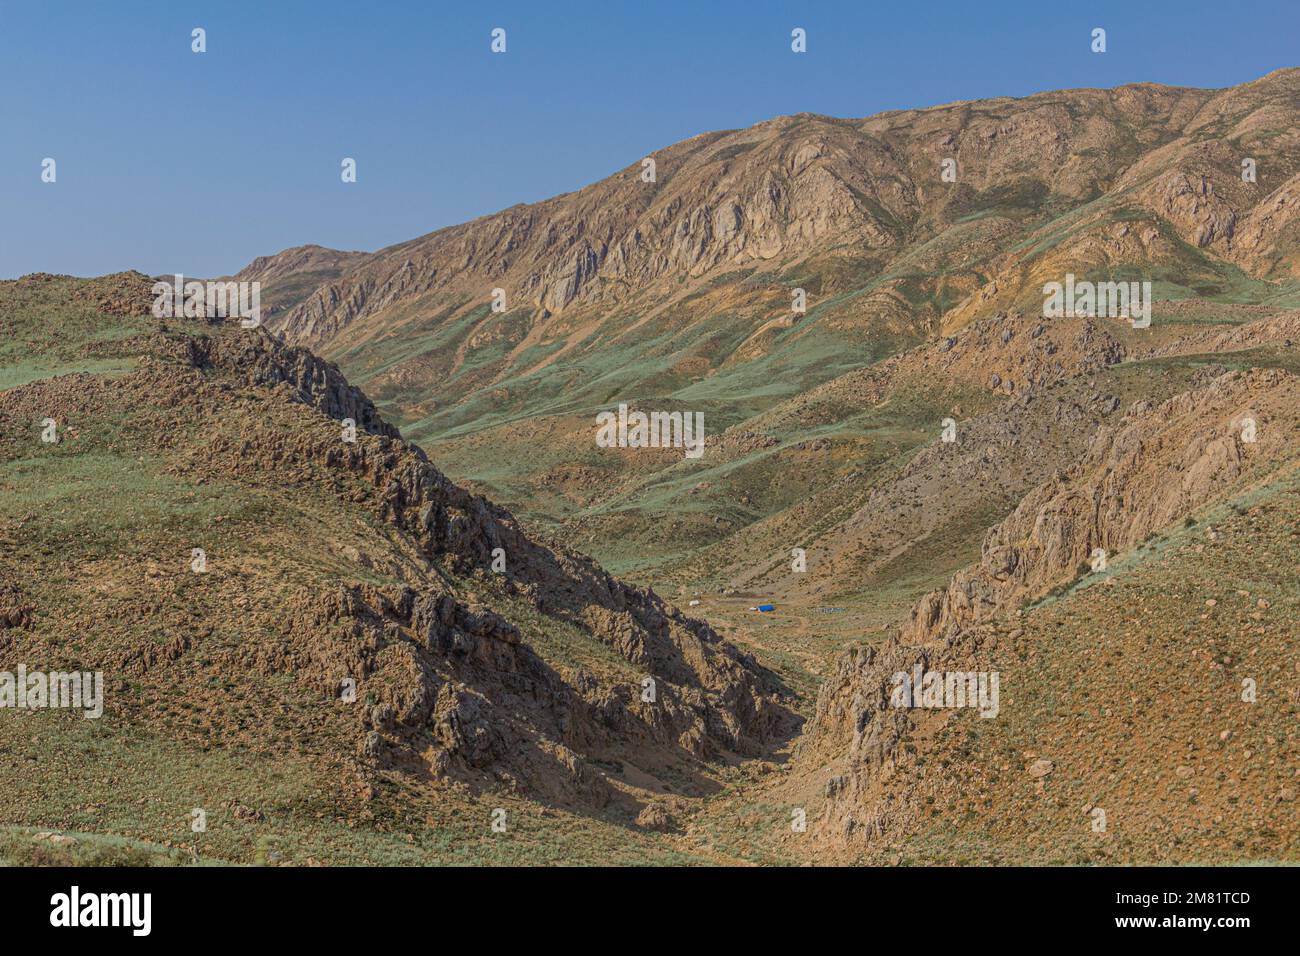 Landscape of Zagros mountains, Iran Stock Photo